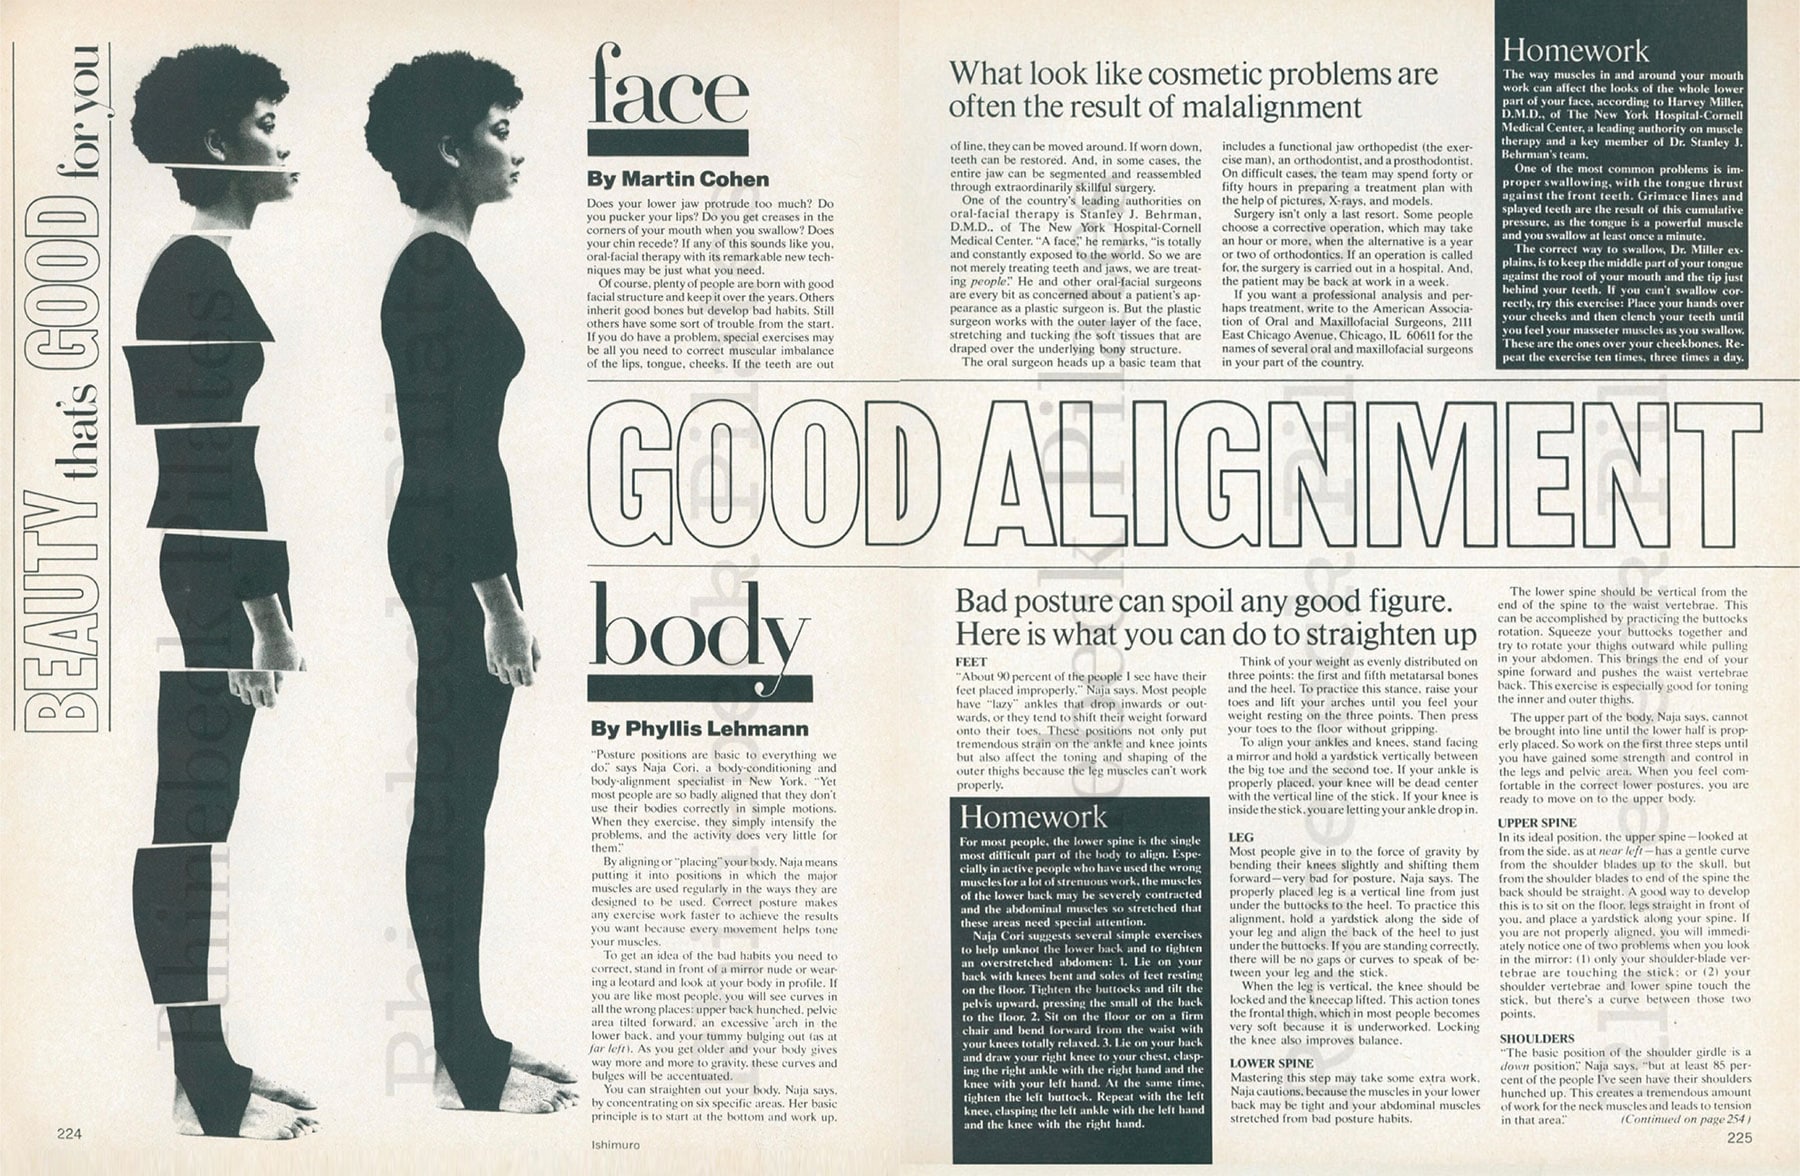 Naja Cori Good Alignment Pilates History Archive Article